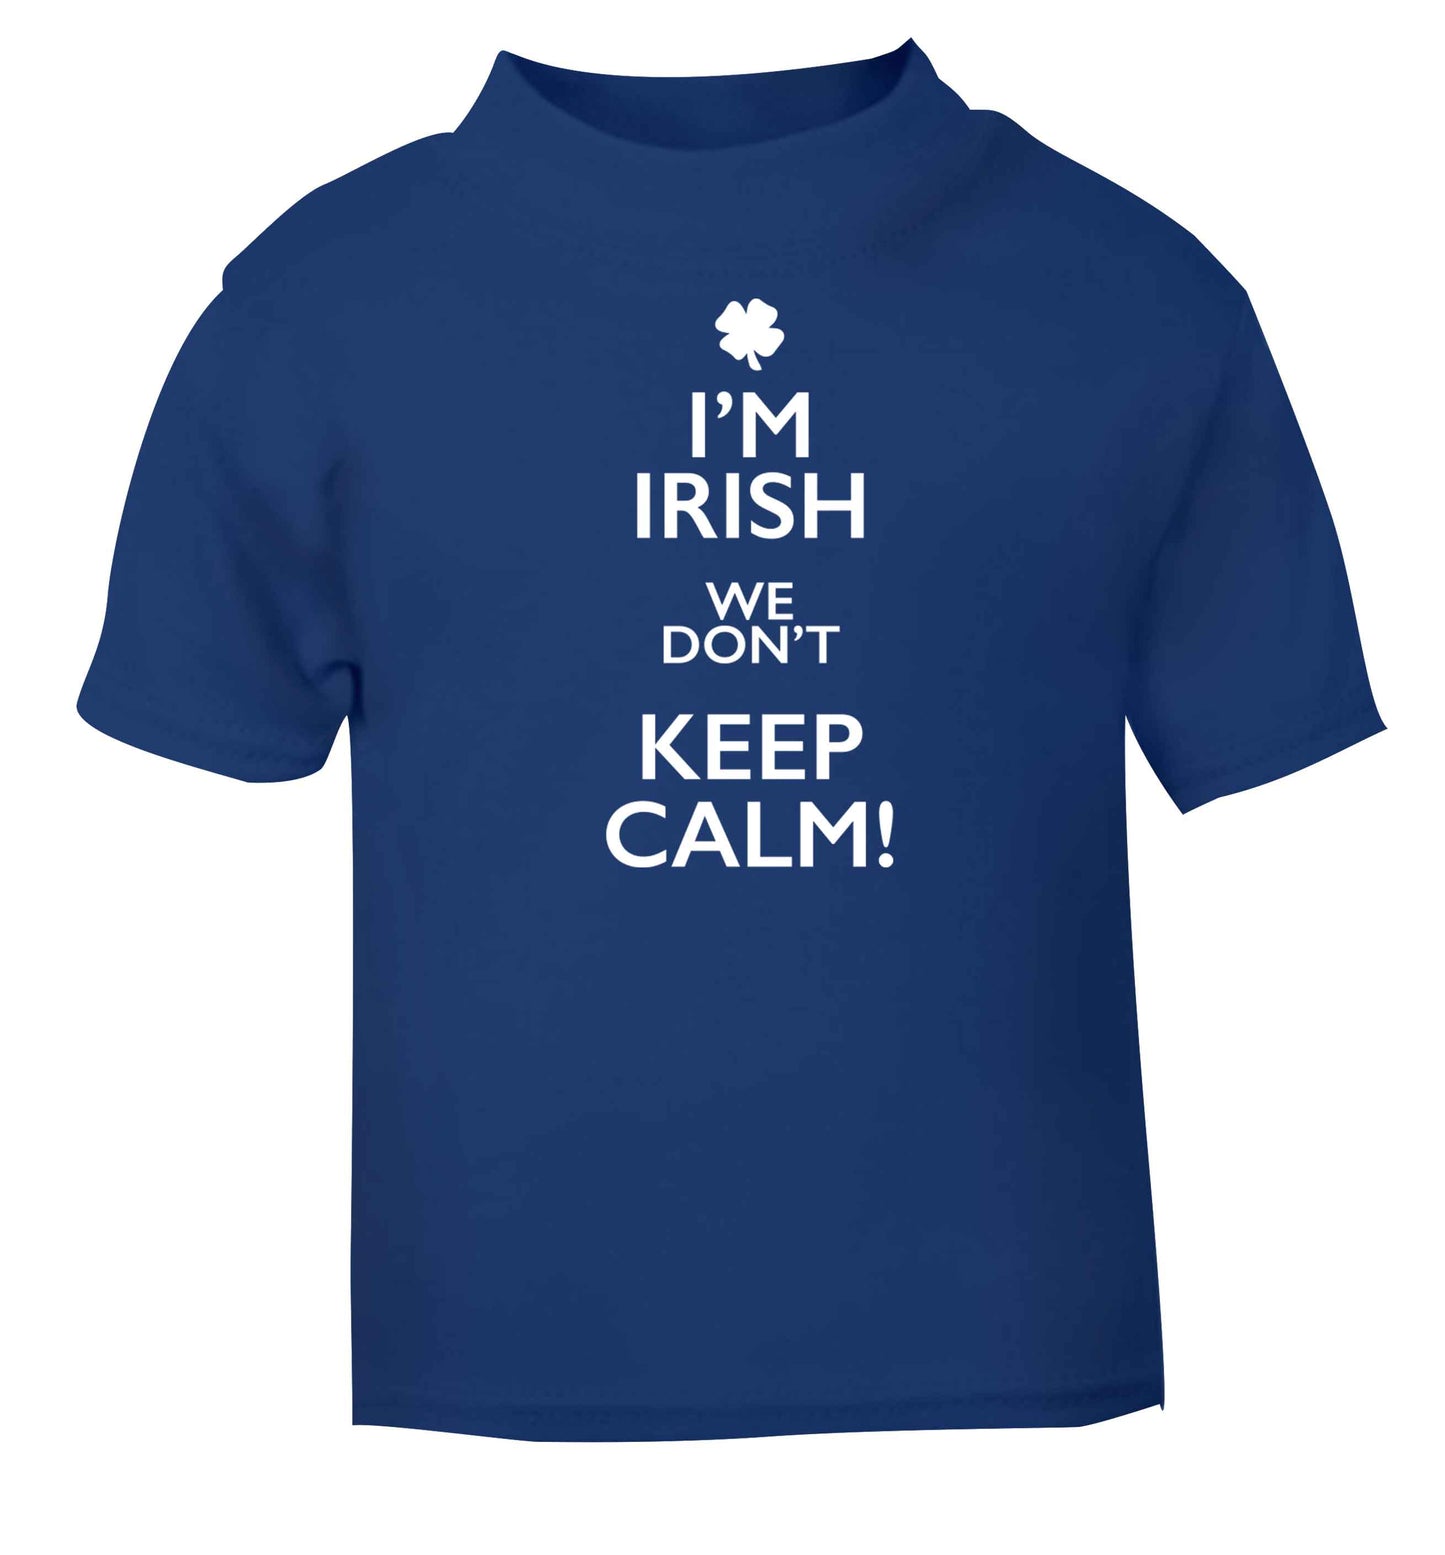 I'm Irish we don't keep calm blue baby toddler Tshirt 2 Years